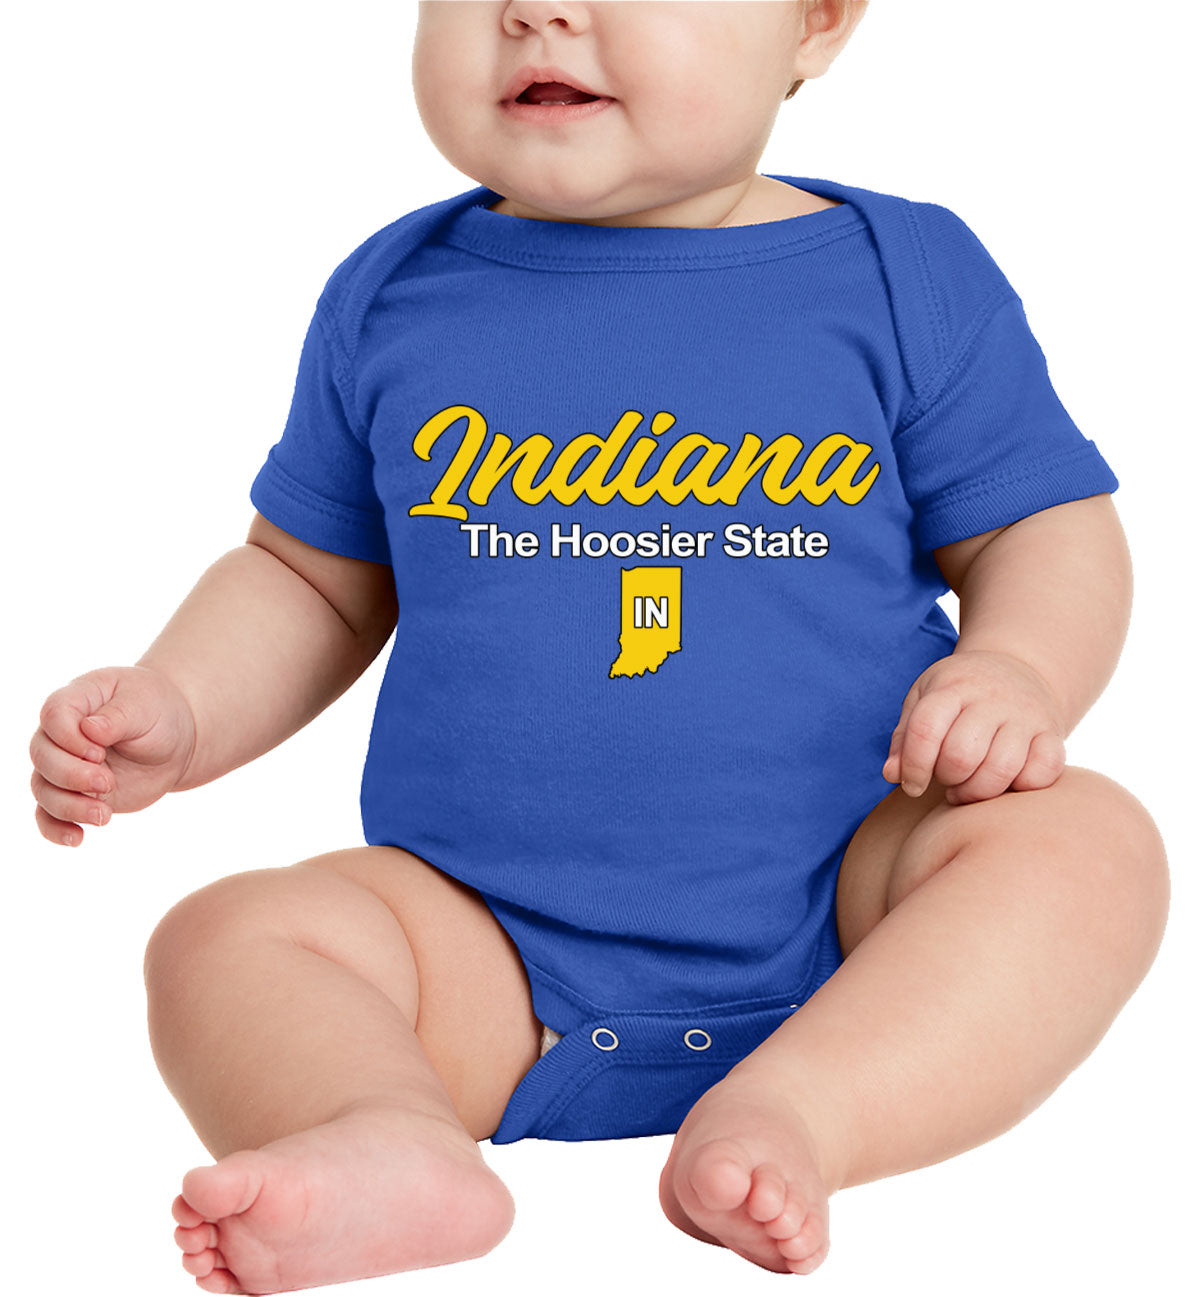 Indiana The Hoosier State Baby Onesie